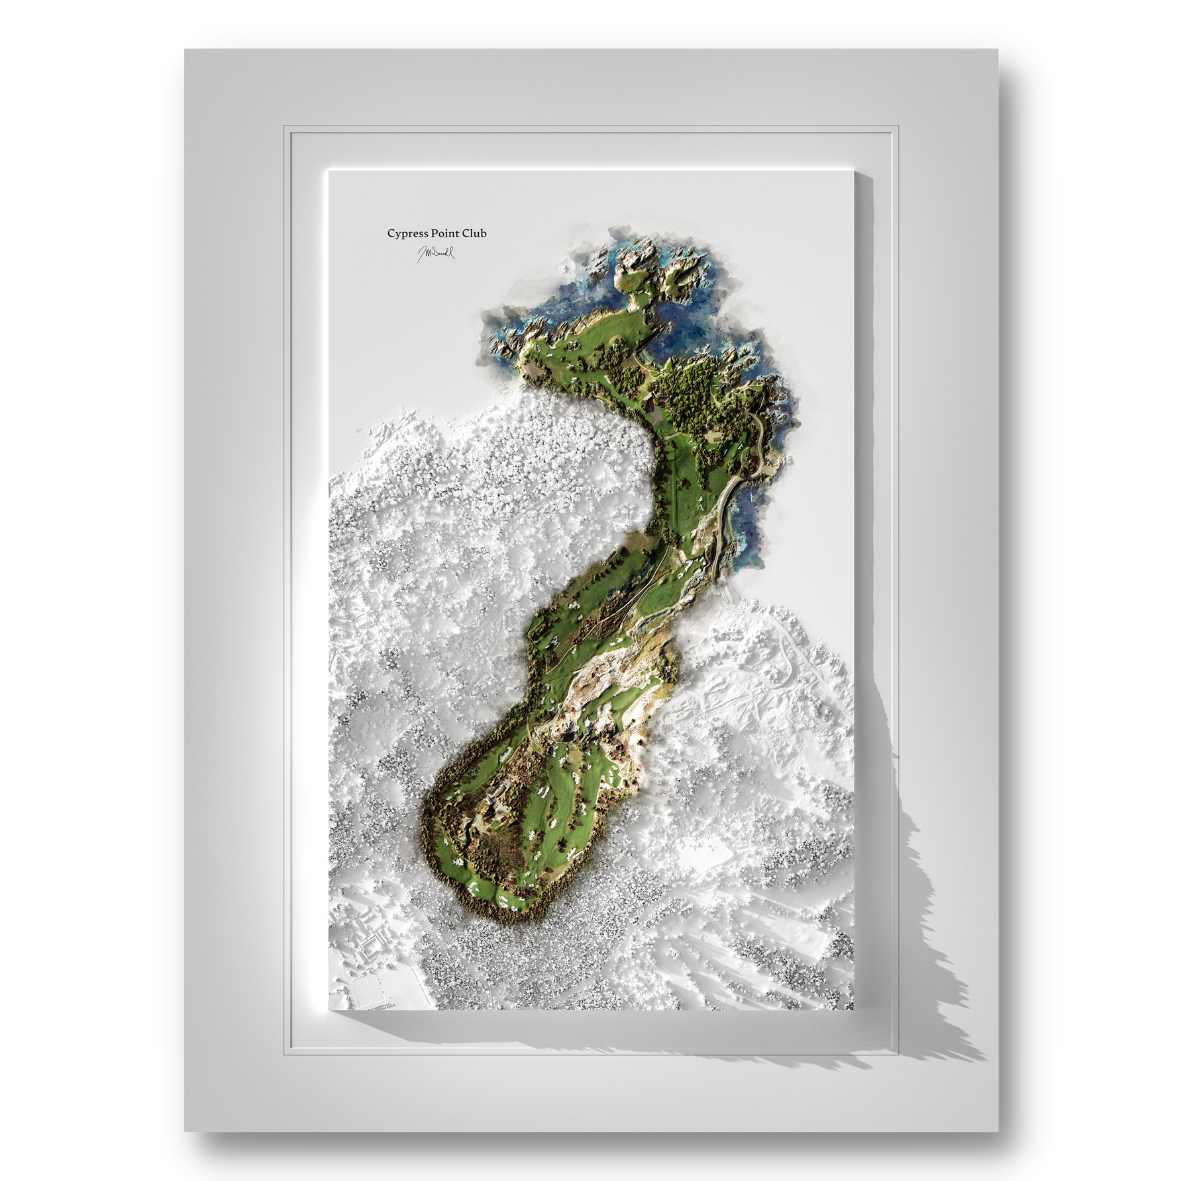 Cypress Point Club - 3D Effect Print by Joe McDonnell